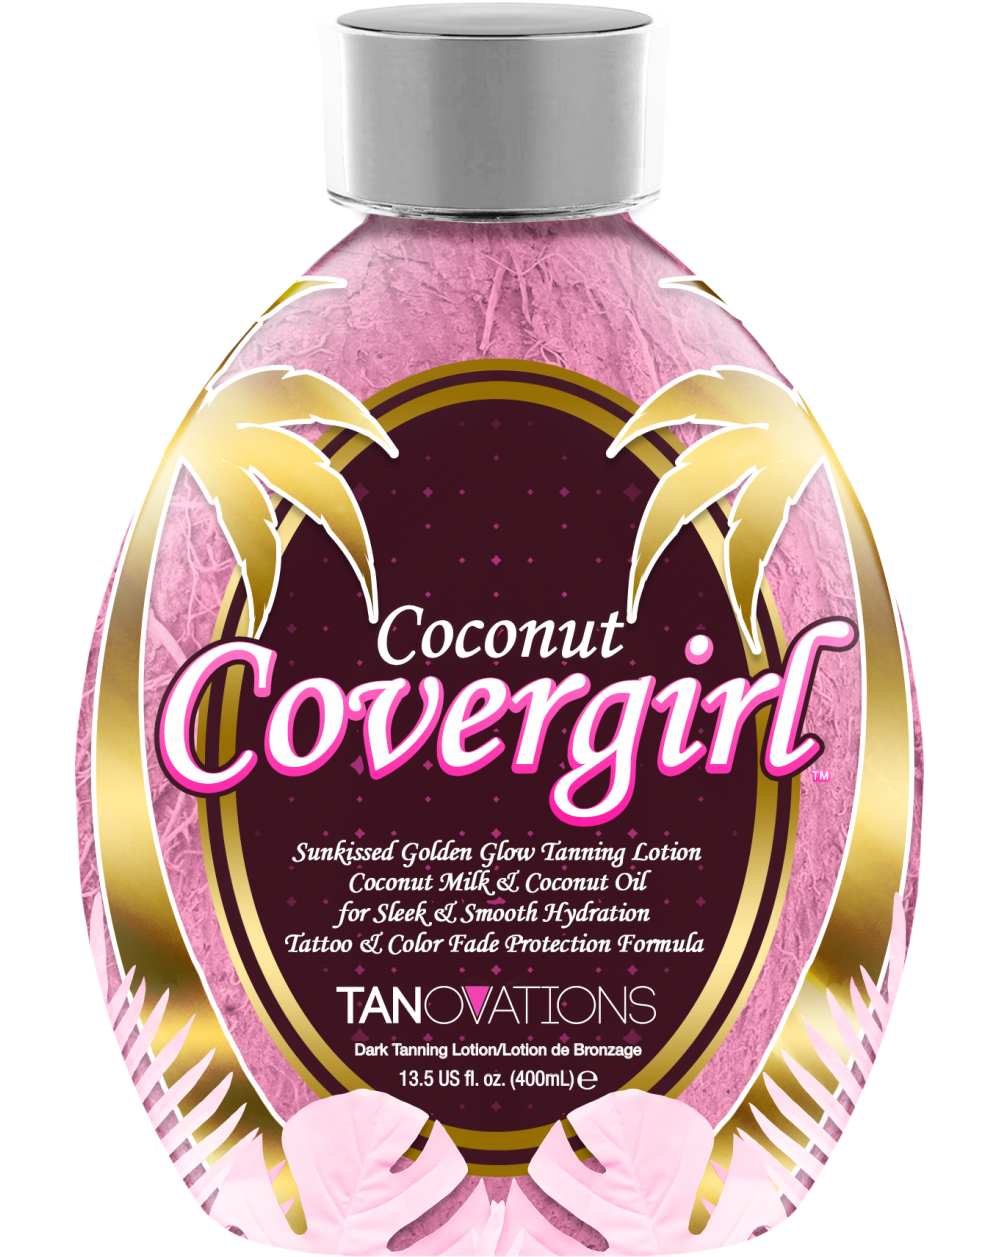 Coconut Covergirl ™-Soliariumo kremai-Exclusive kolekcija